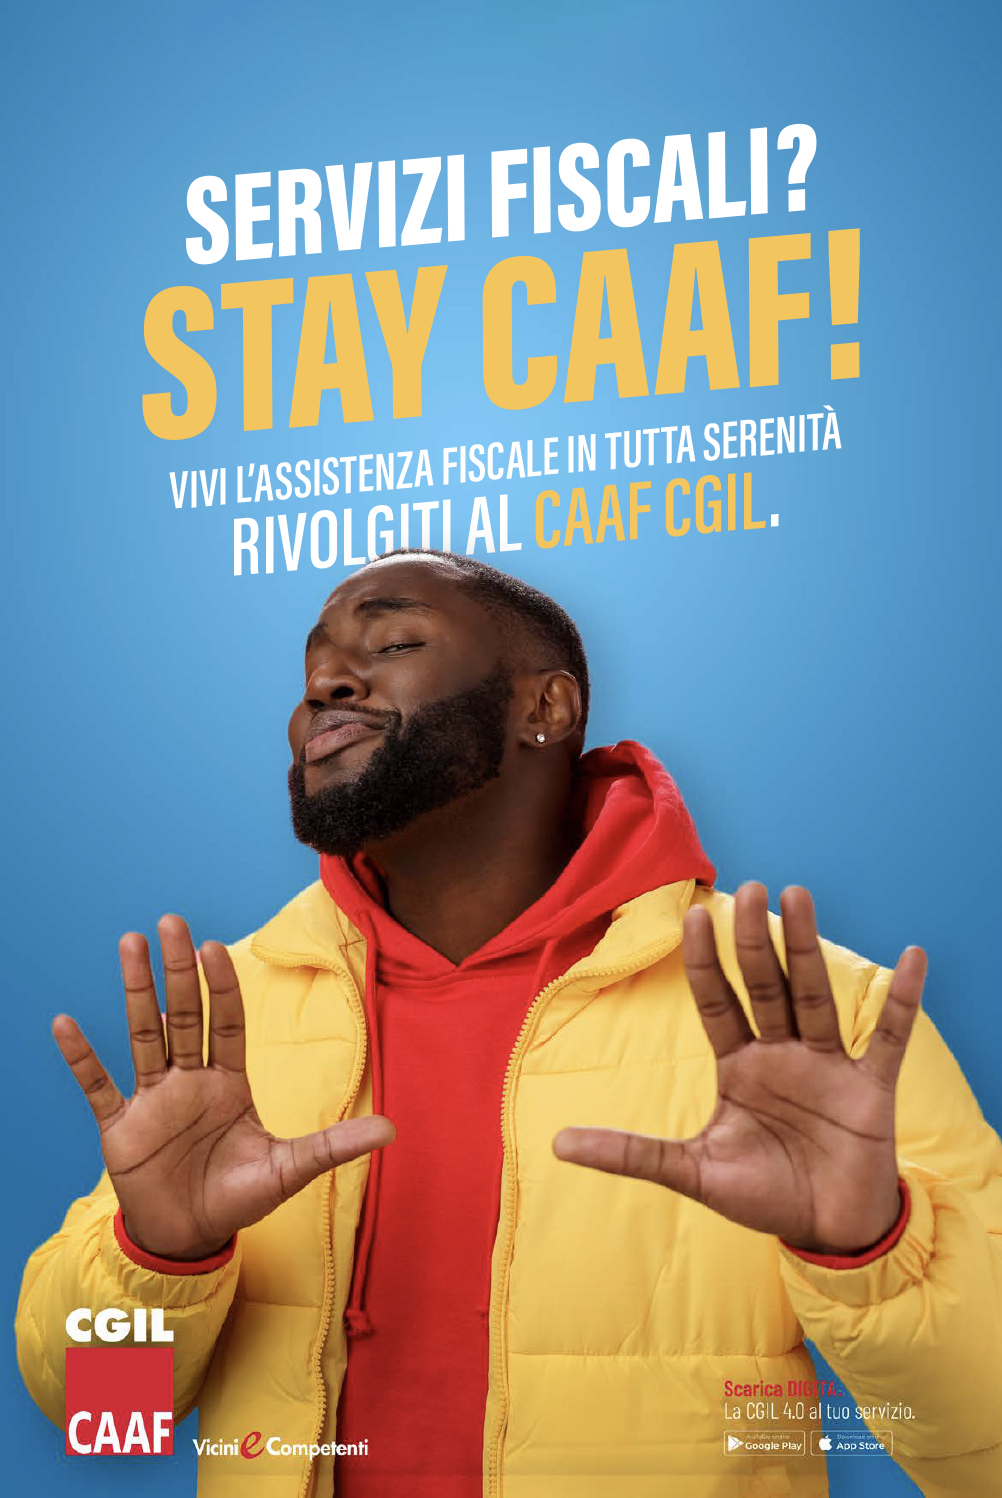 Campagna pubblicitaria per CGIL CAAF. Servizi fiscali? Stay CAAF.